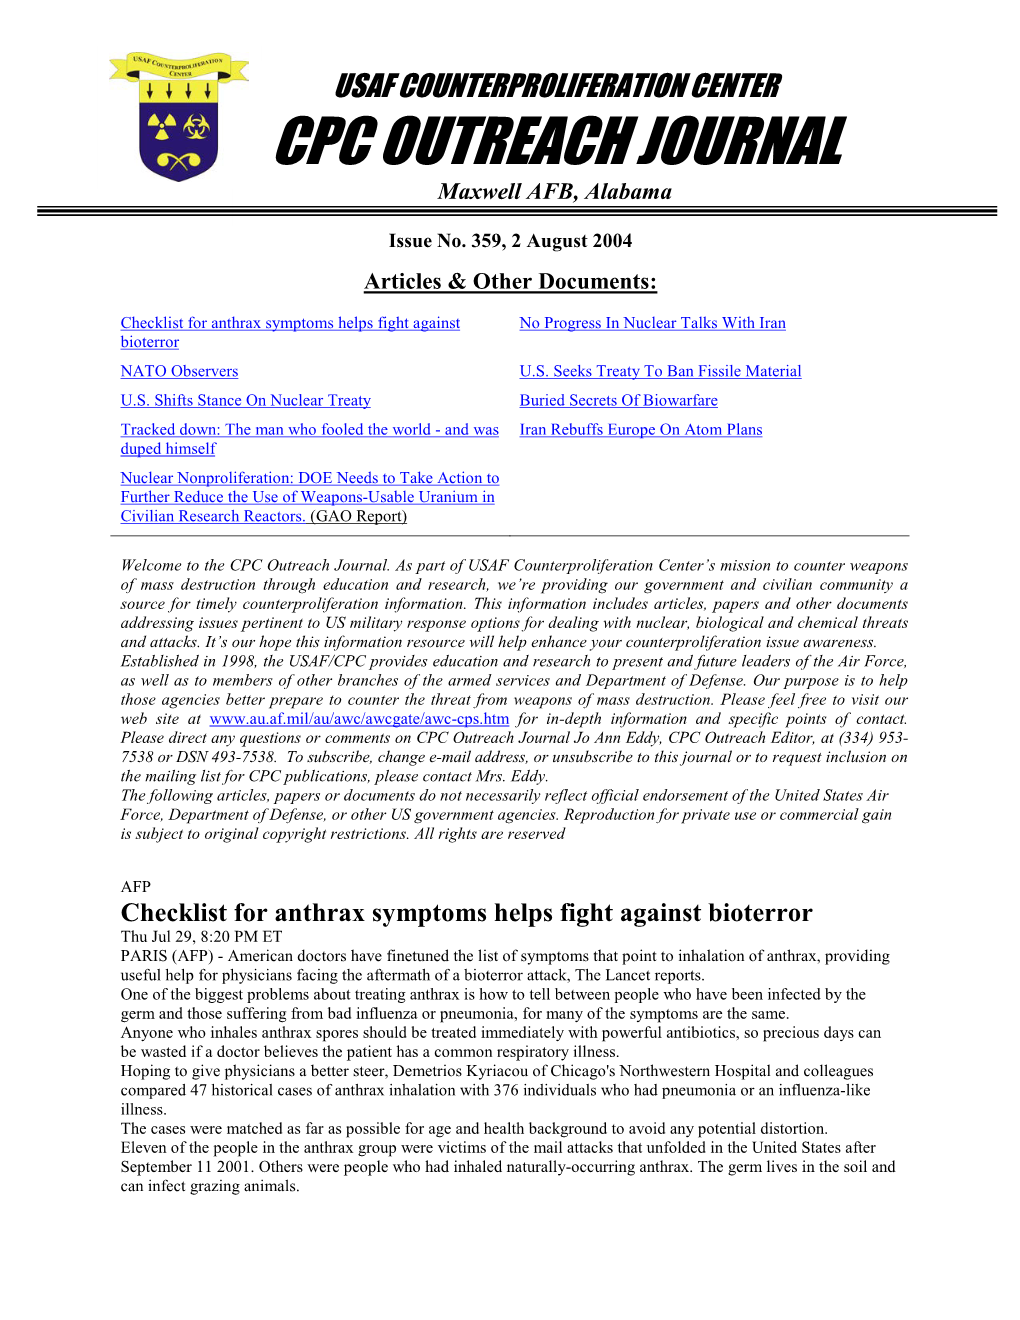 USAF Counterproliferation Center CPC Outreach Journal